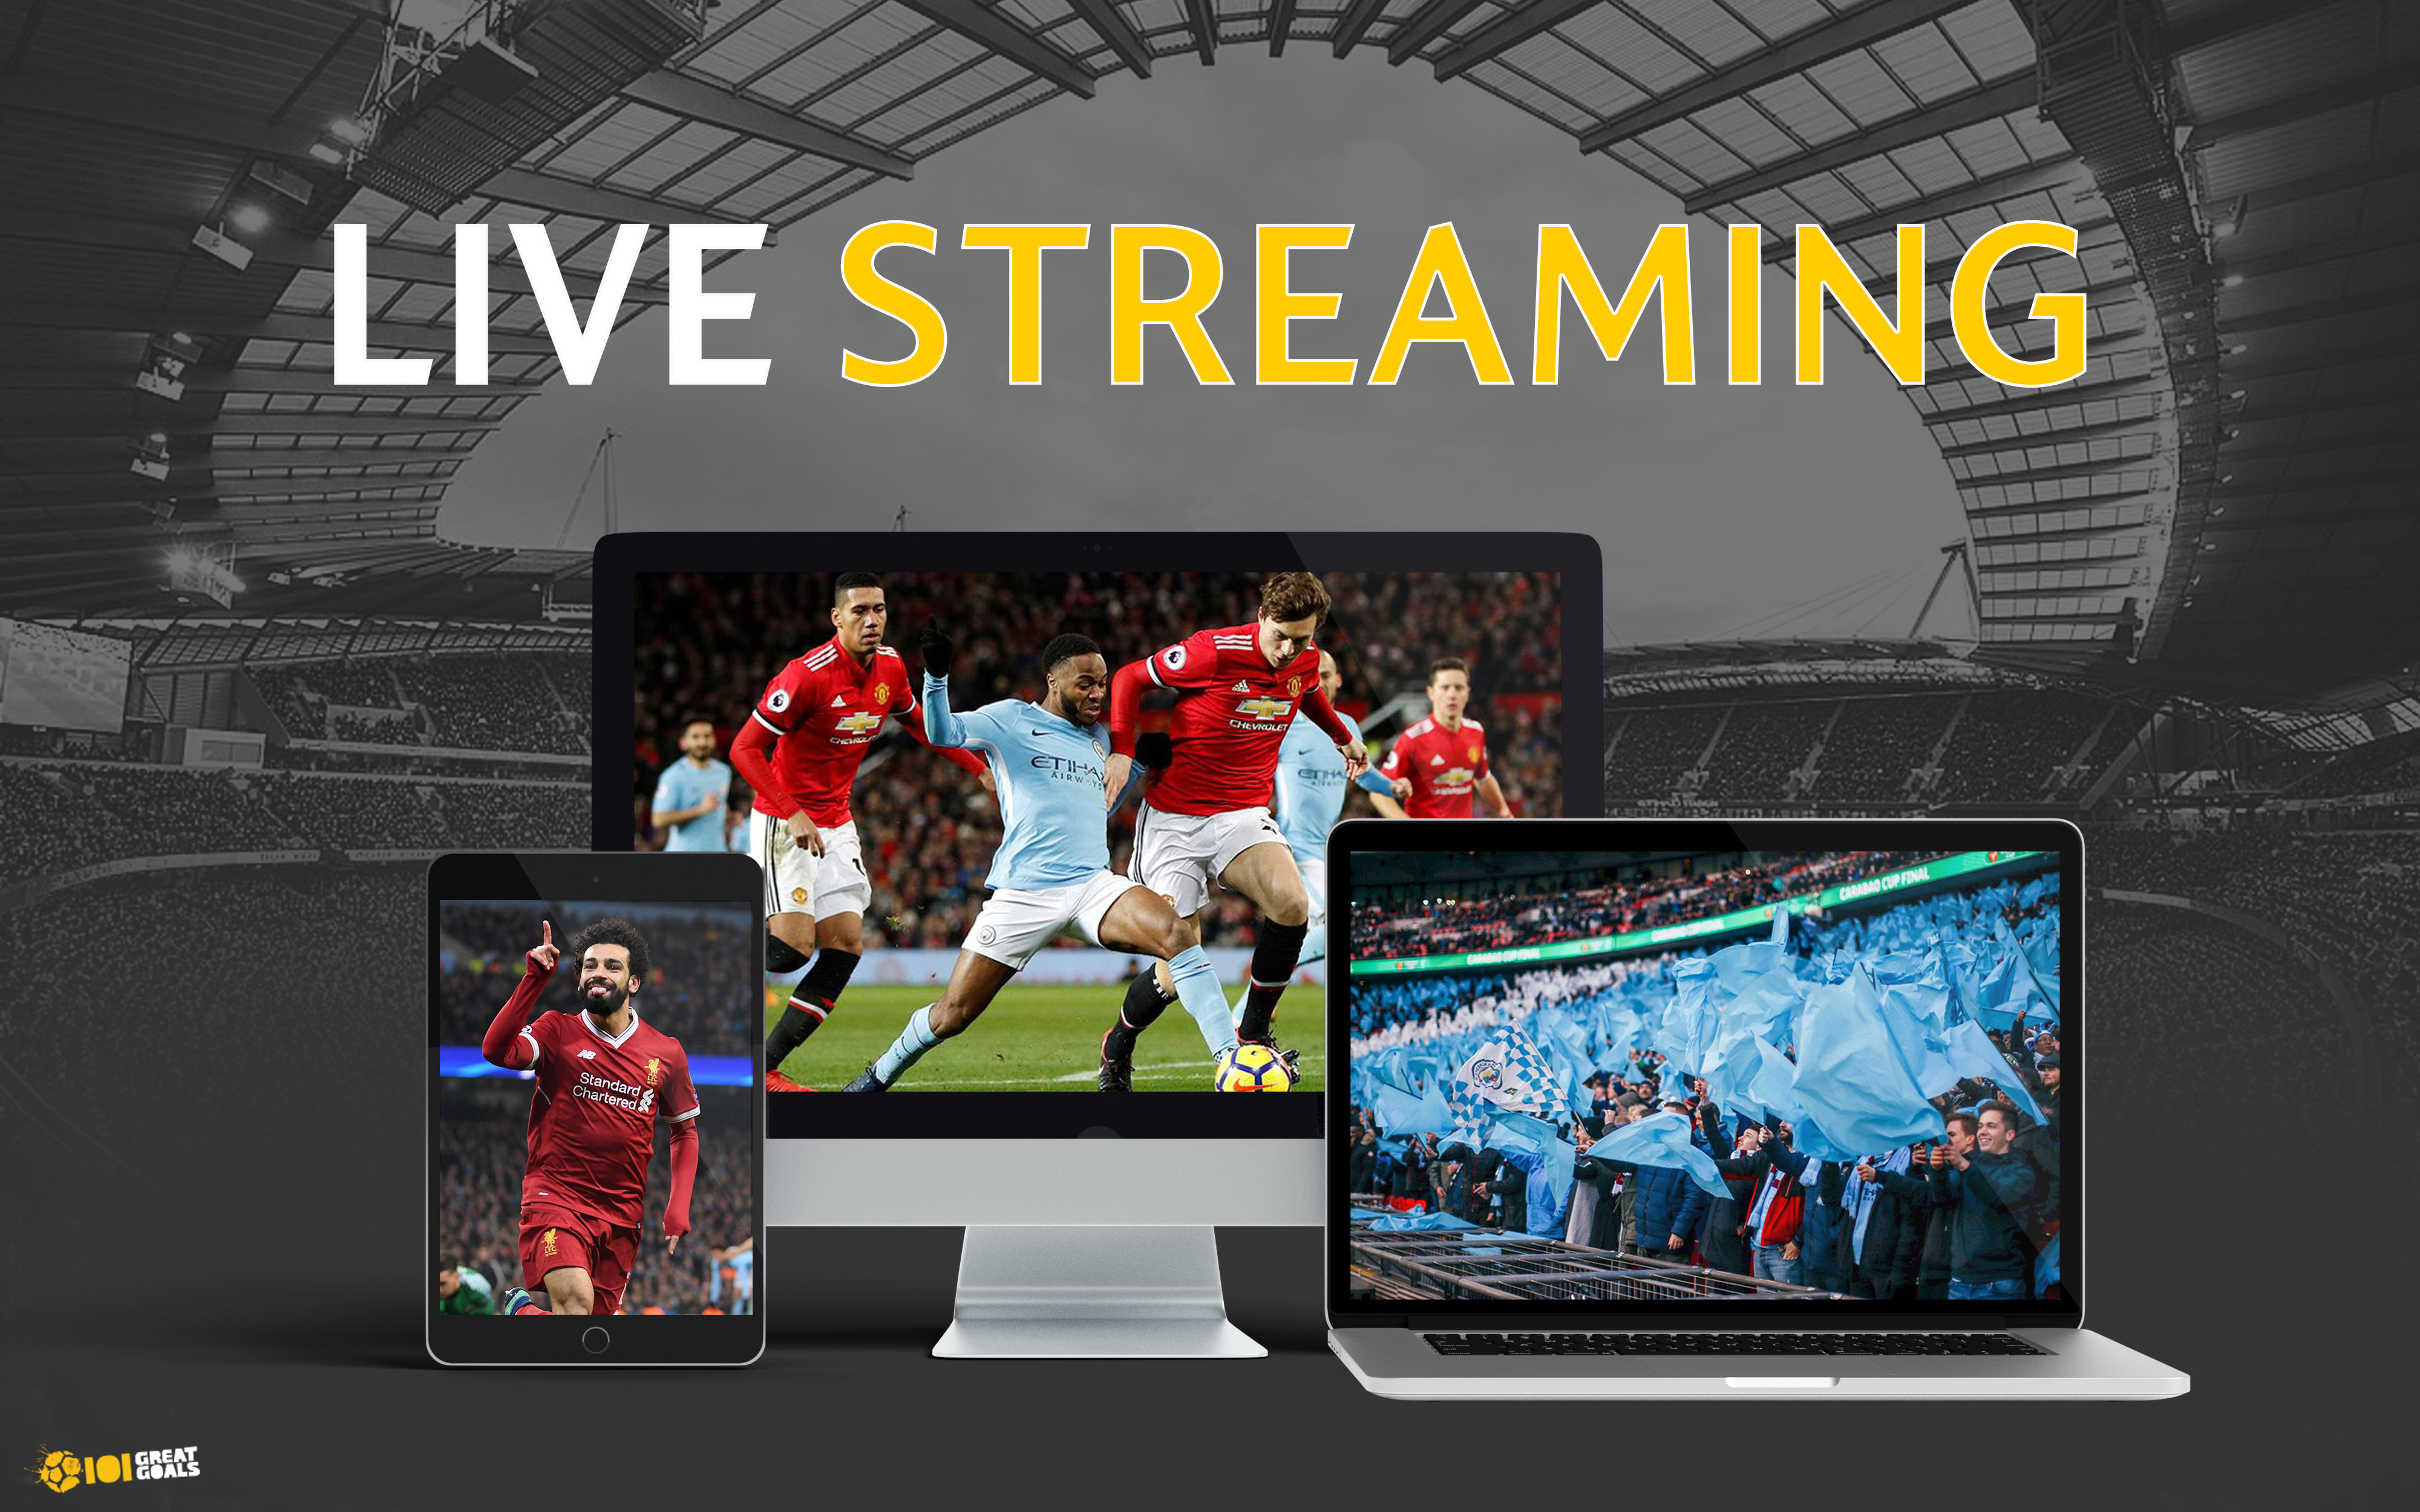 Livetv трансляция футбольных матчей. Live streaming. Стрим спорт. Стриминг. Live стрим.